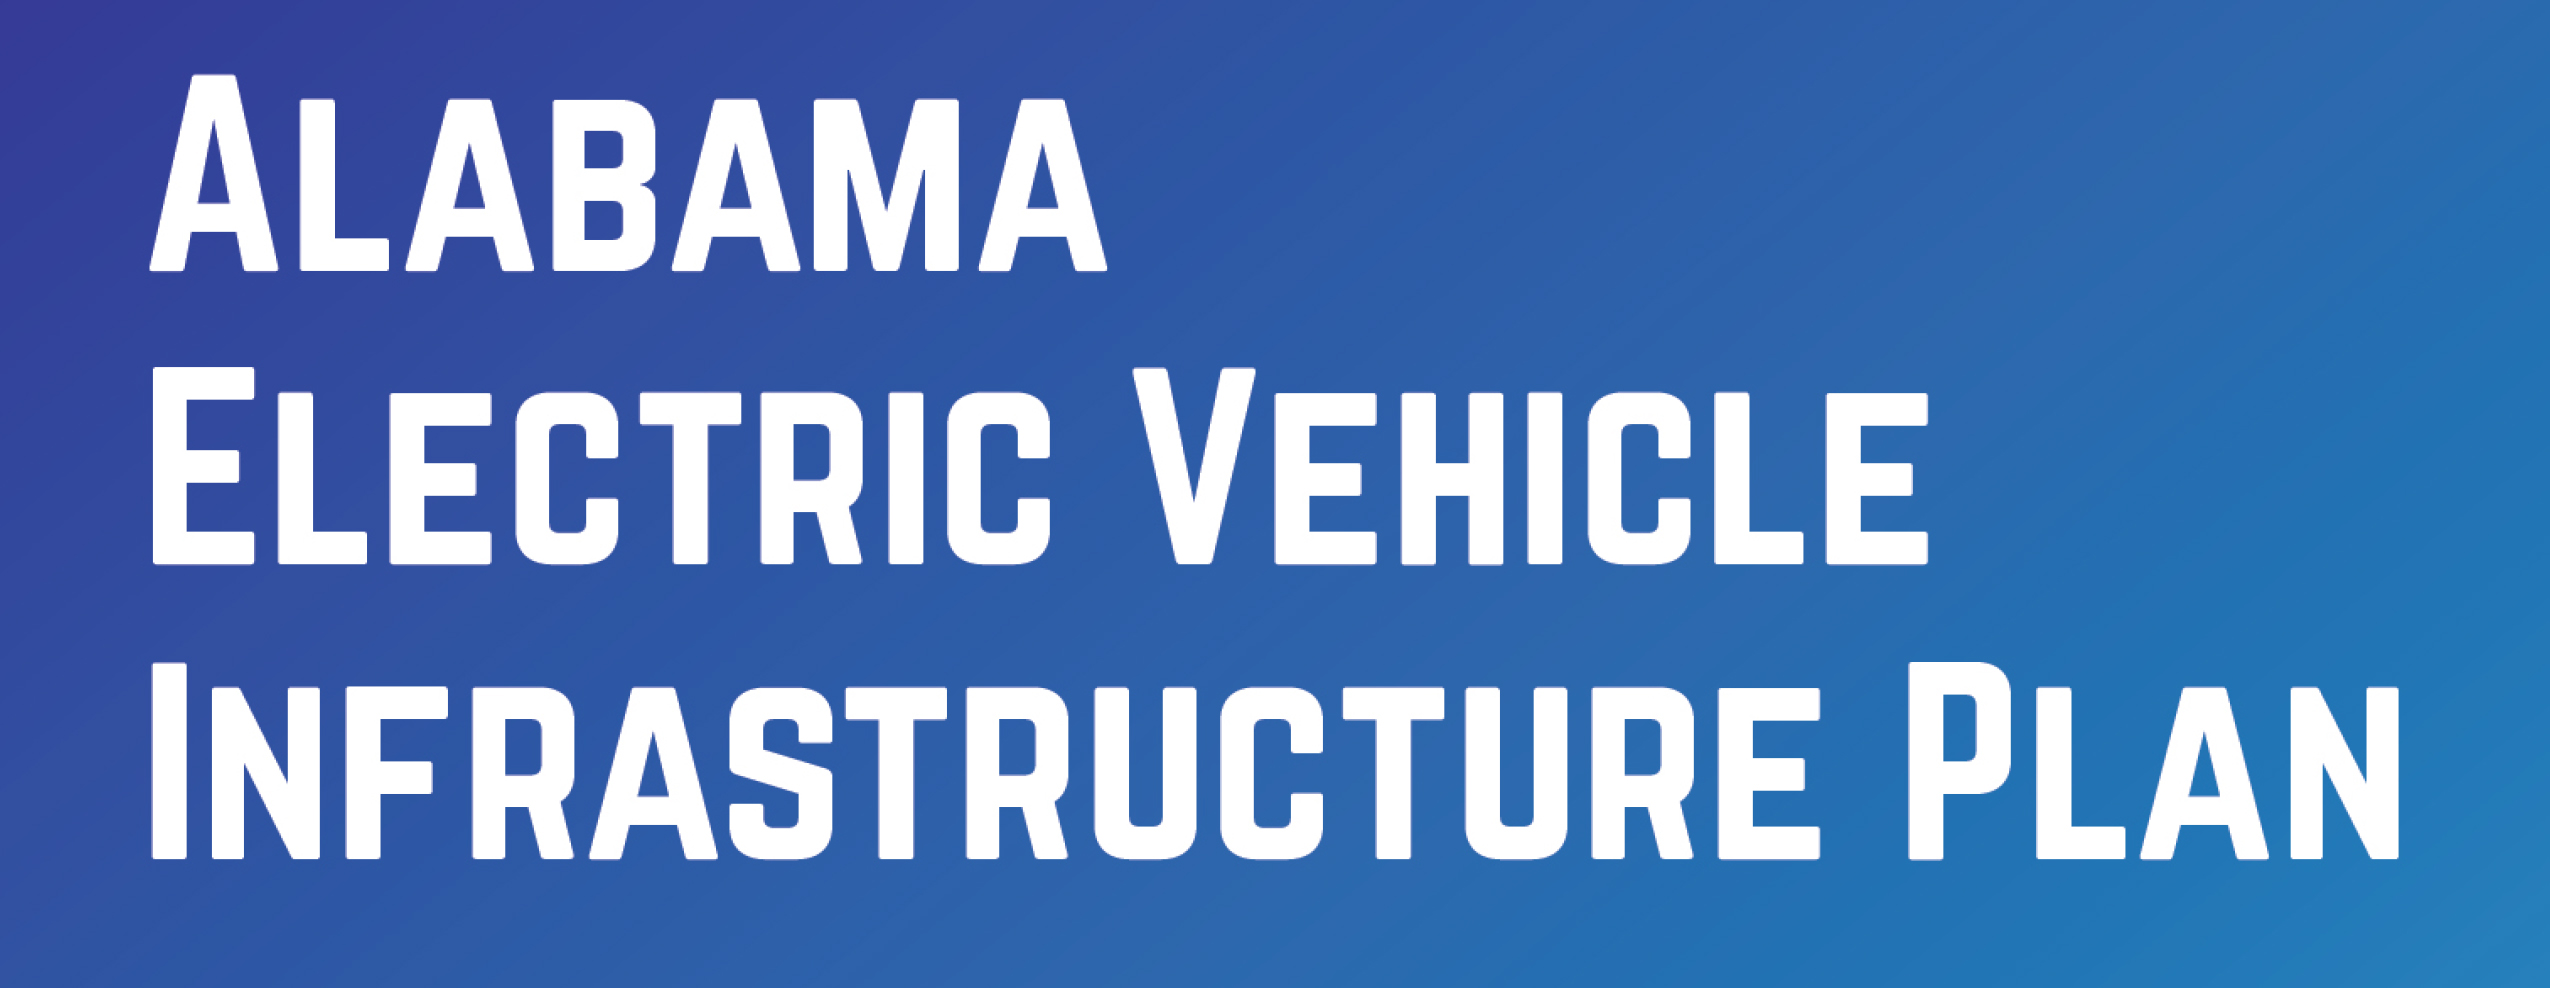 2021 Alabama Electric Vehicle ADECA